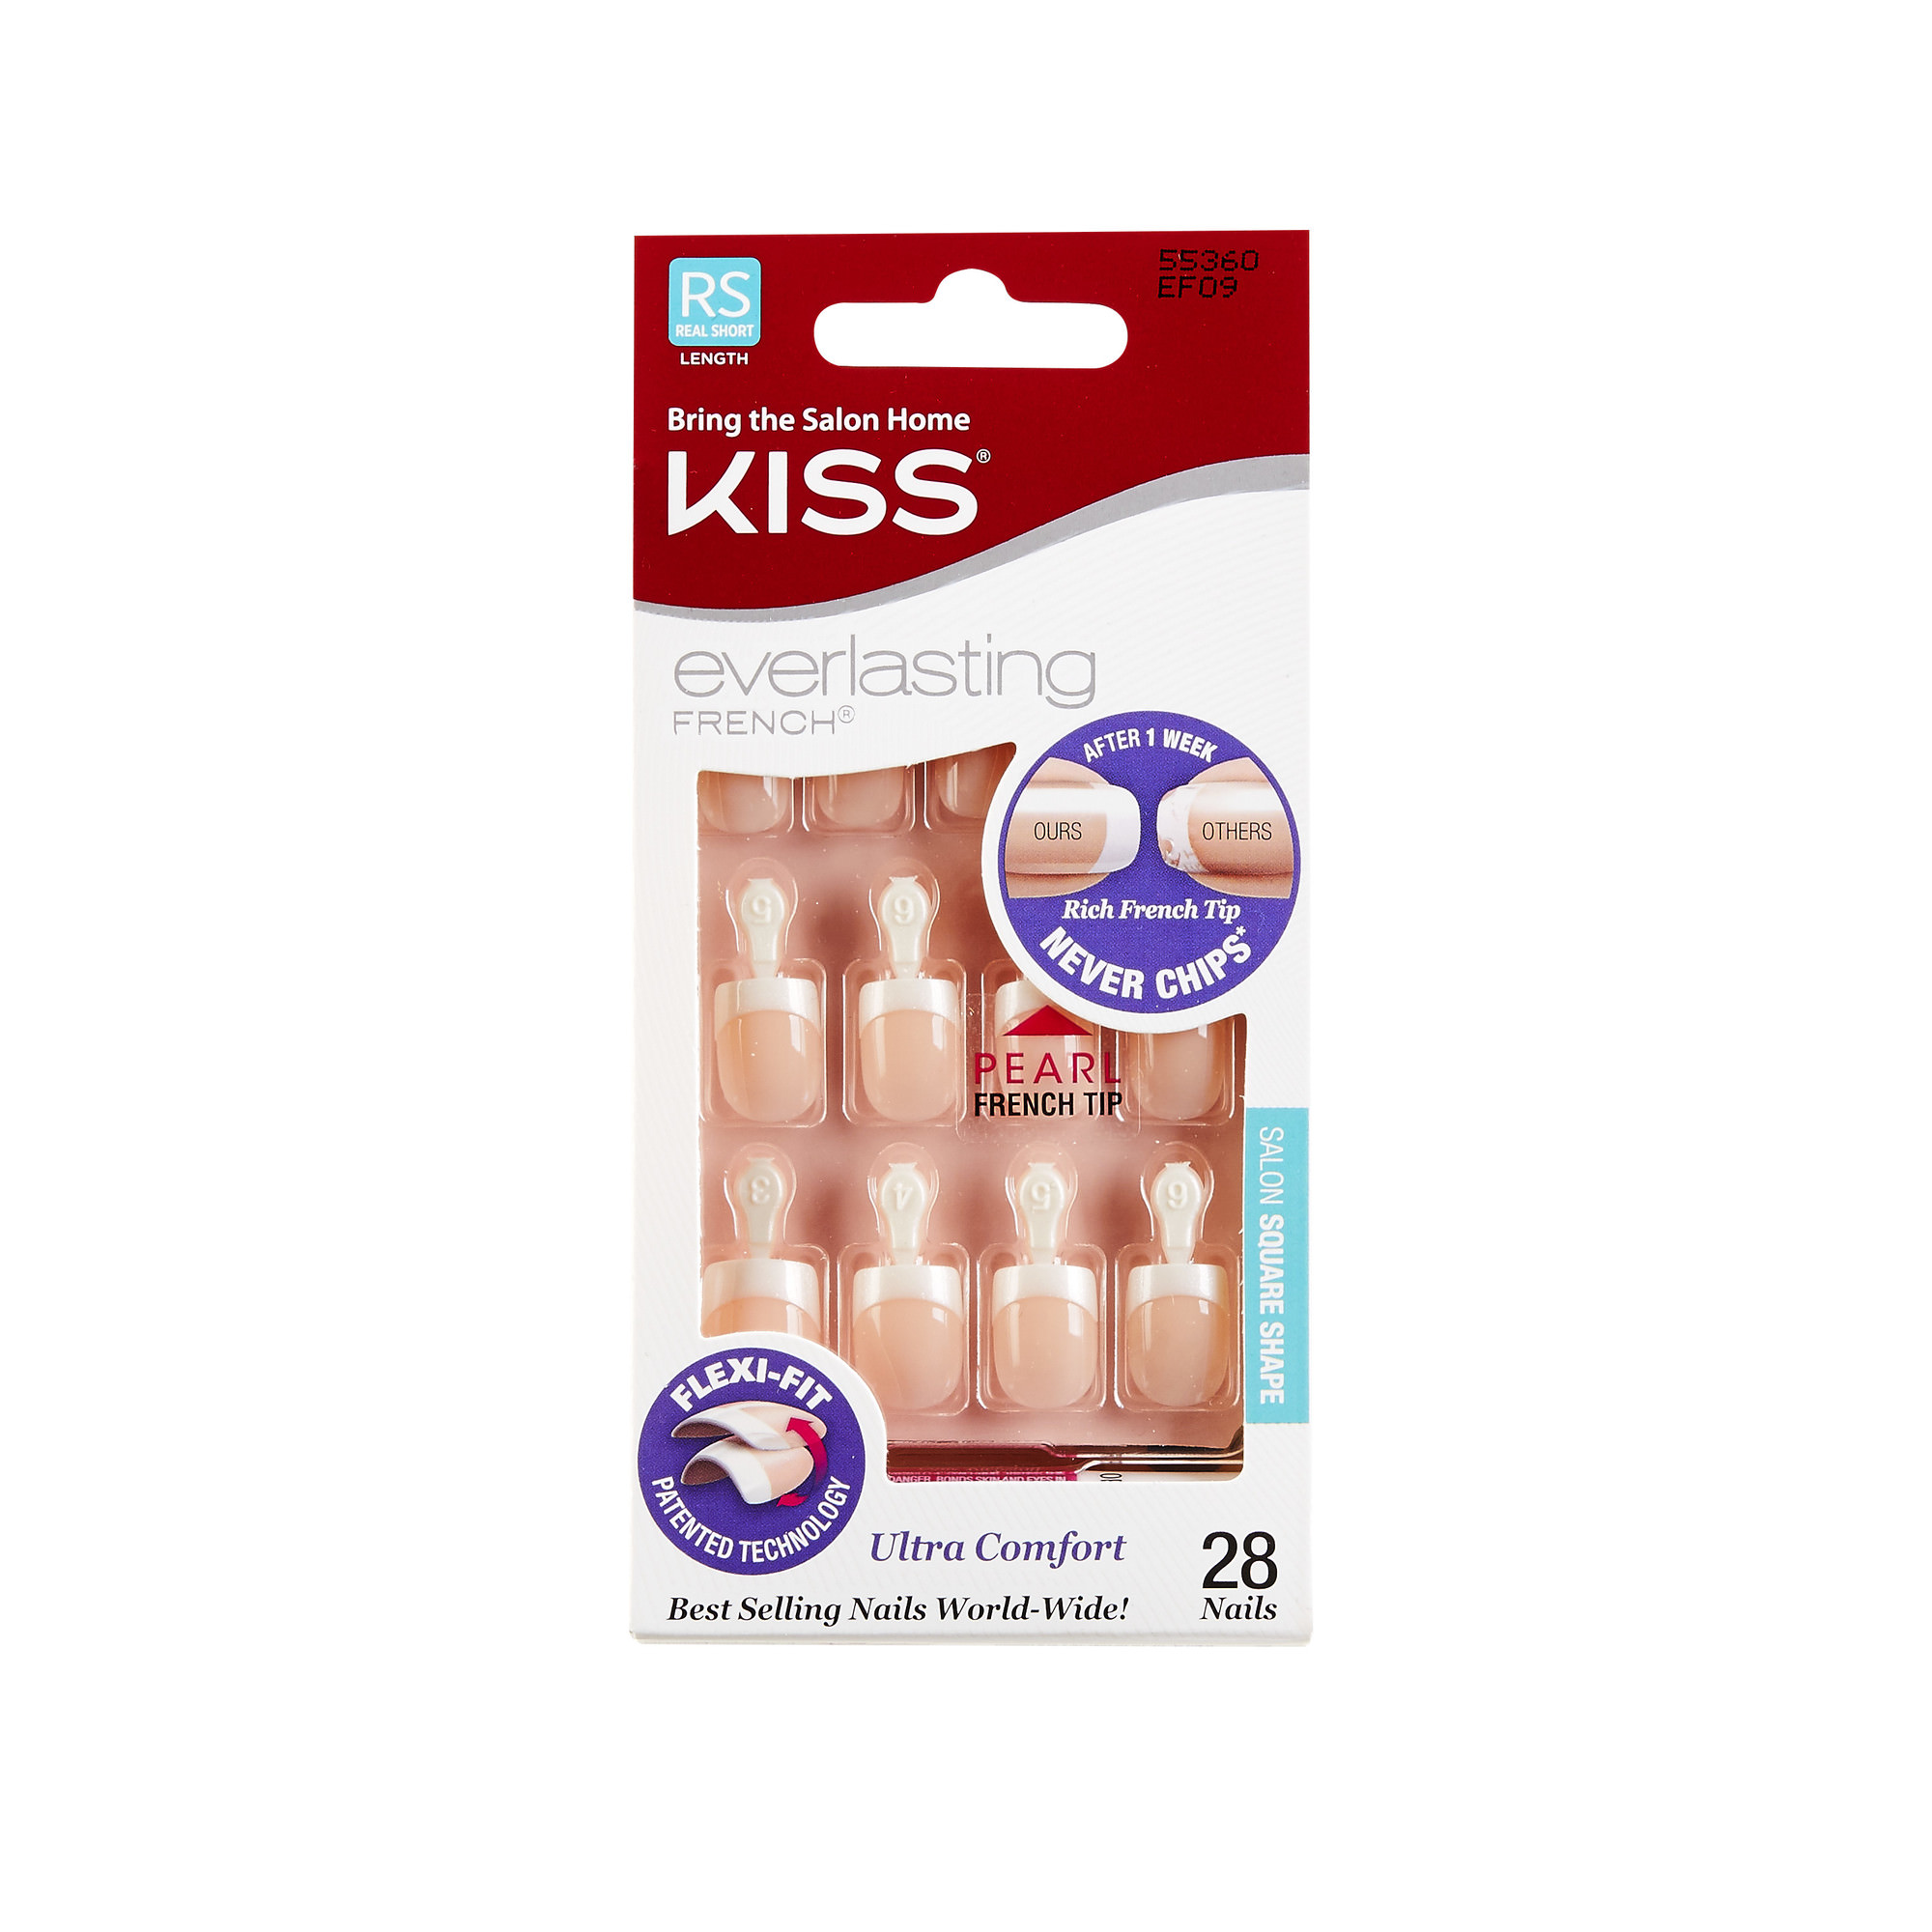 KISS Everlasting French Press on Fake Nails - Real Short - image 1 of 7